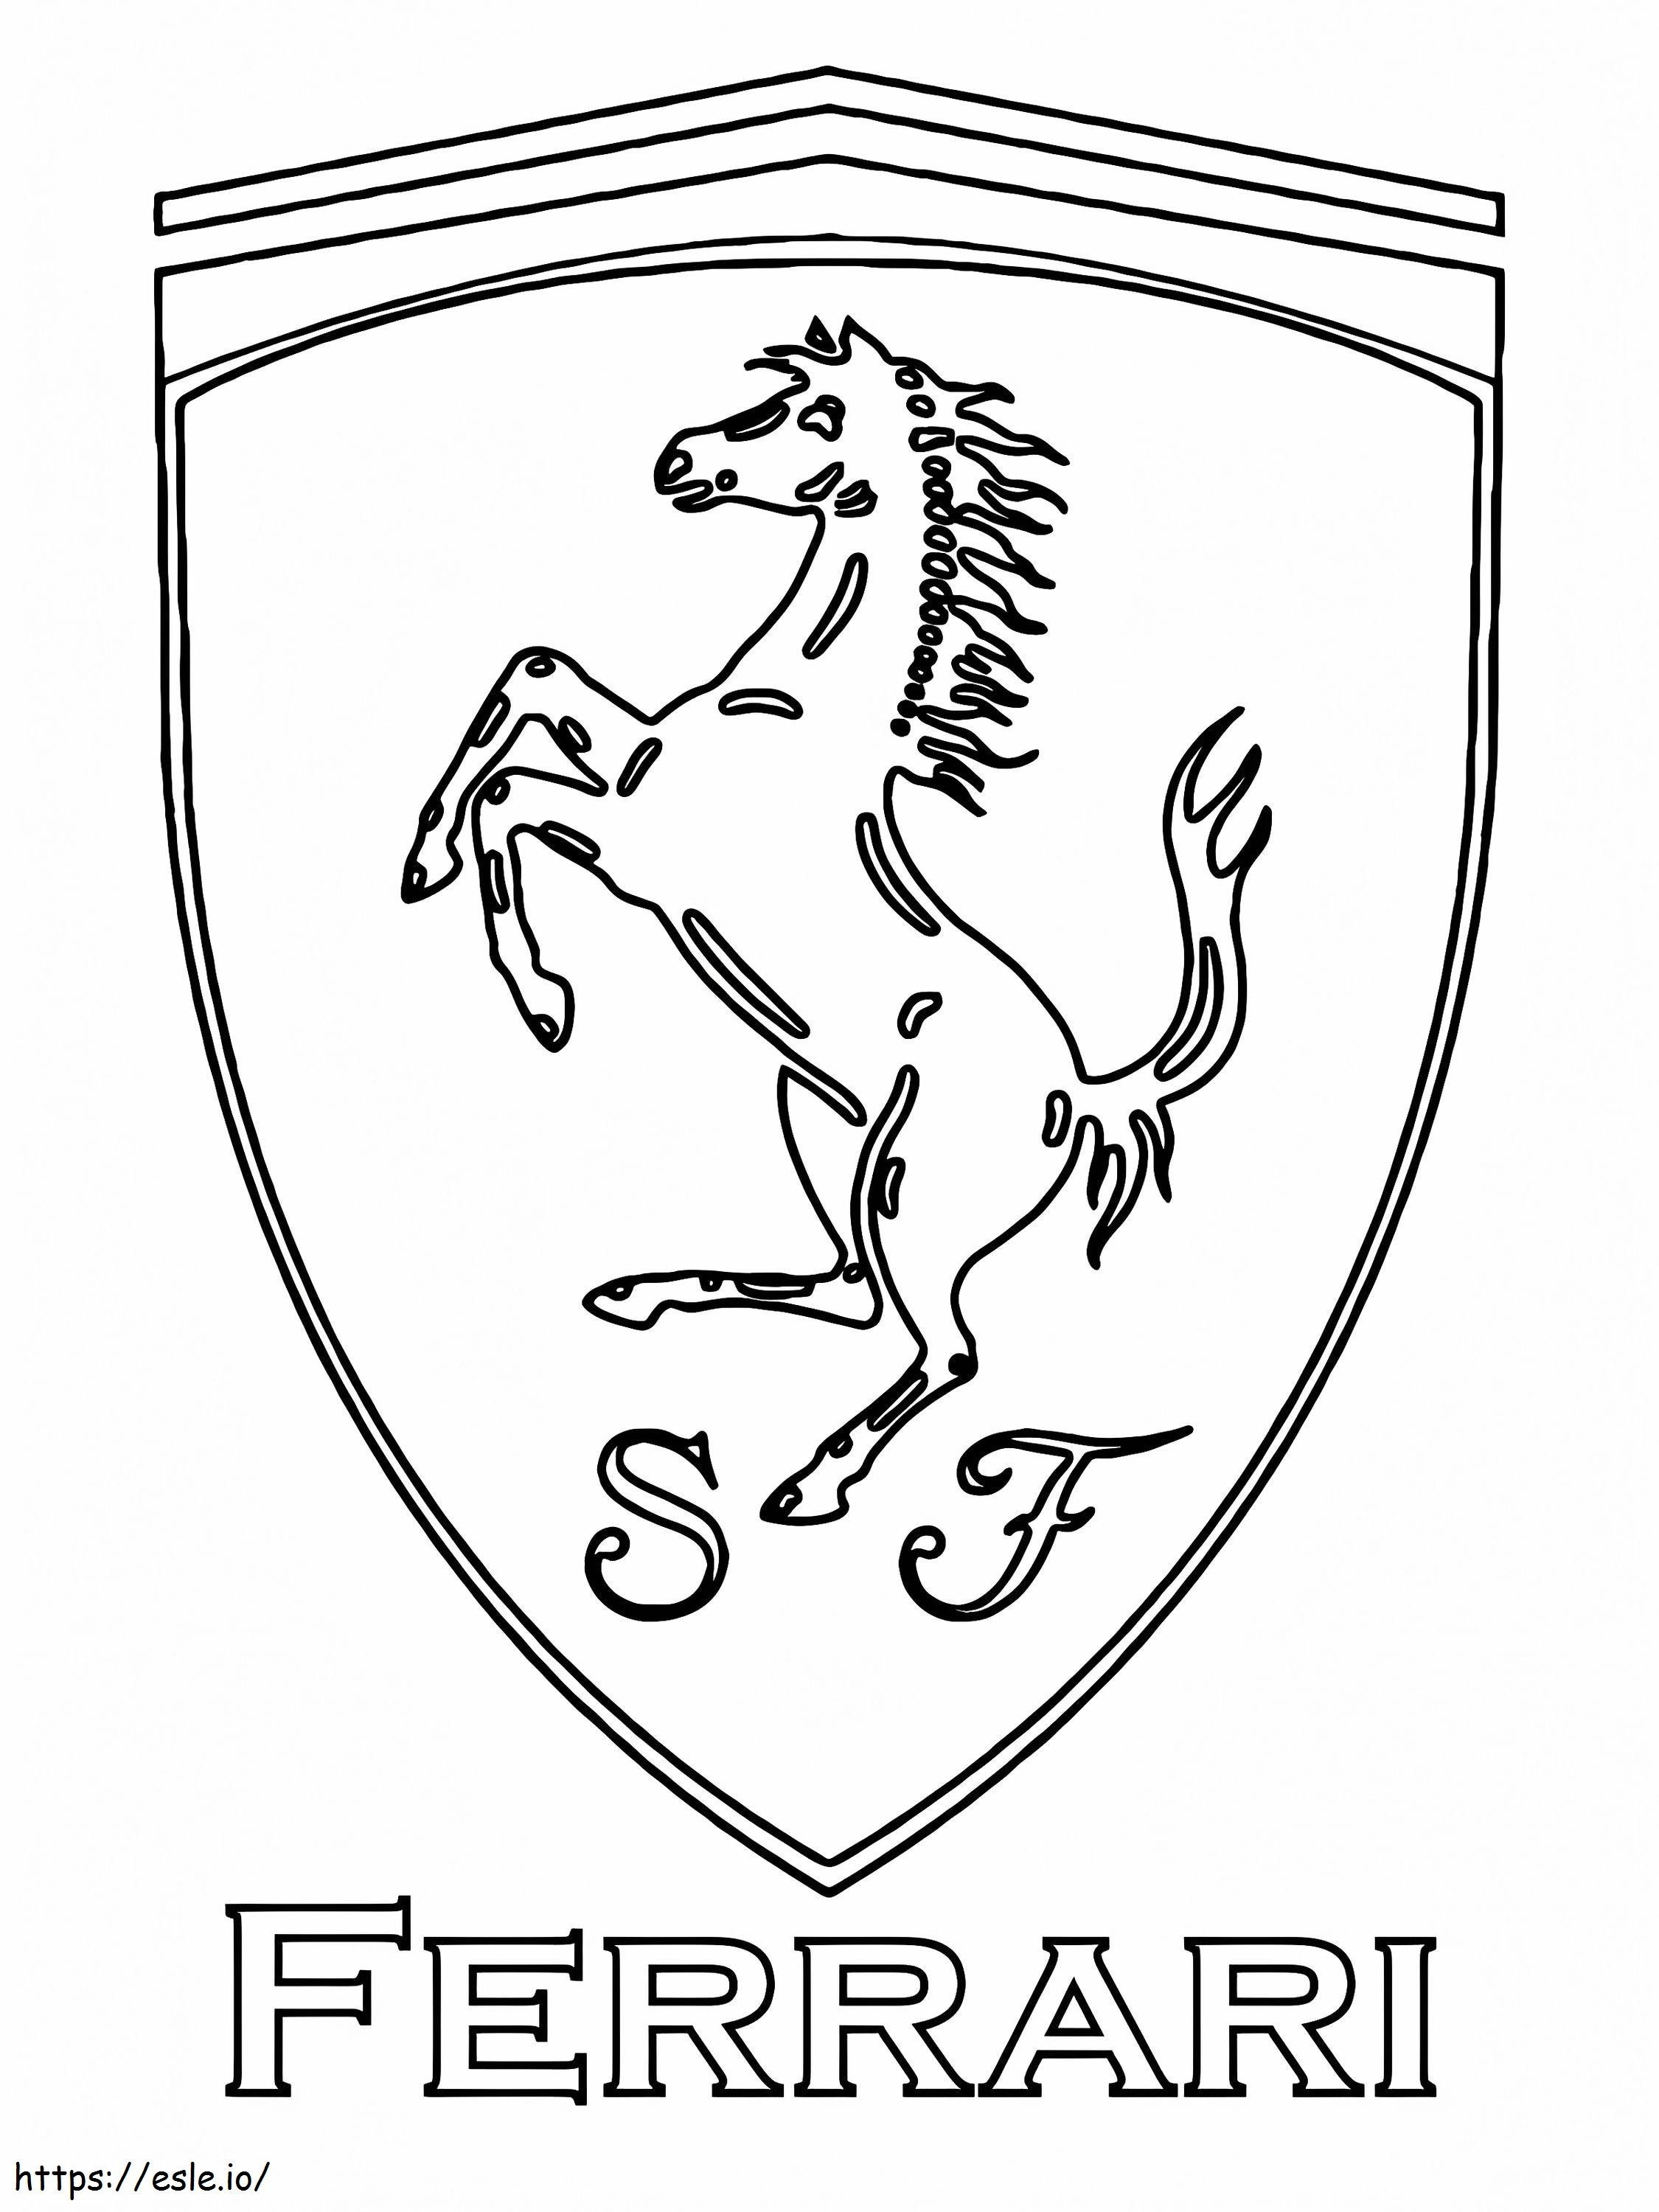 Logo samochodu Ferrari kolorowanka